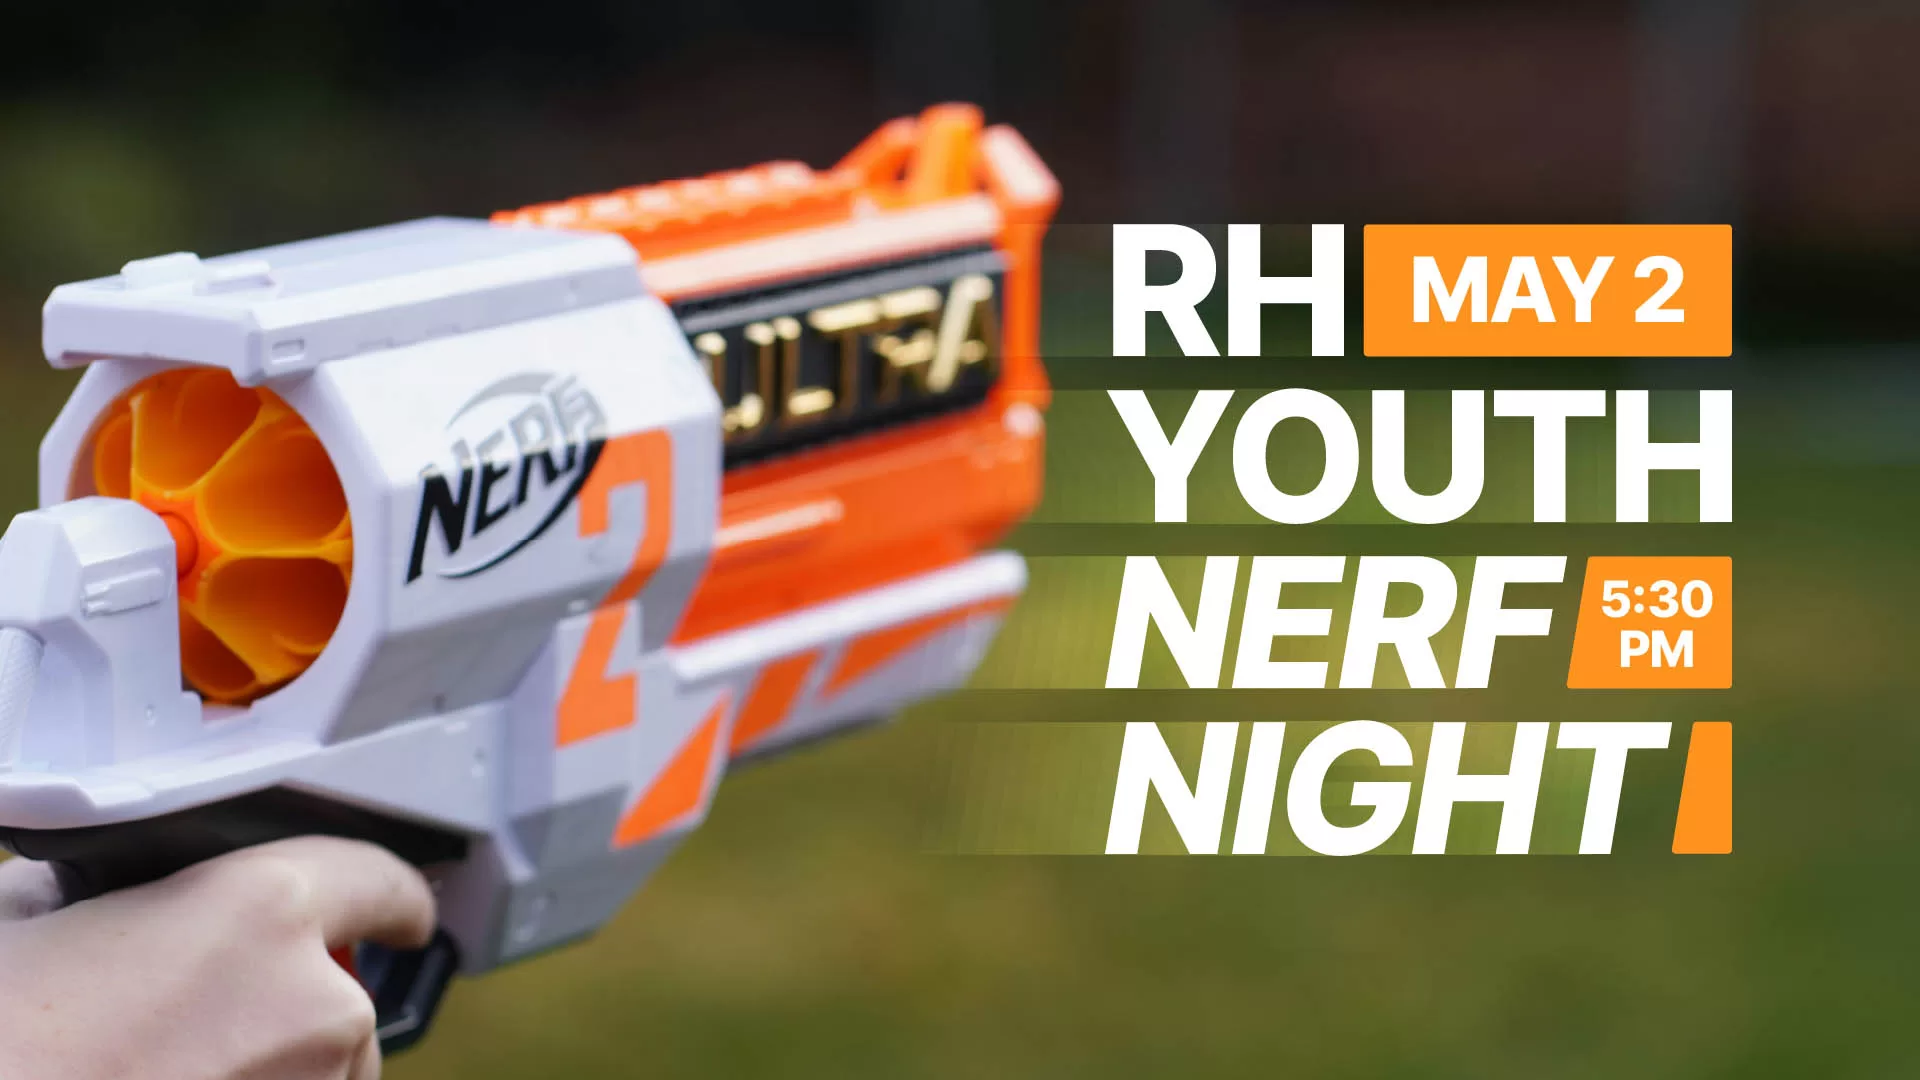 RH Youth Nerf Night. May 2. 5:30 p.m.